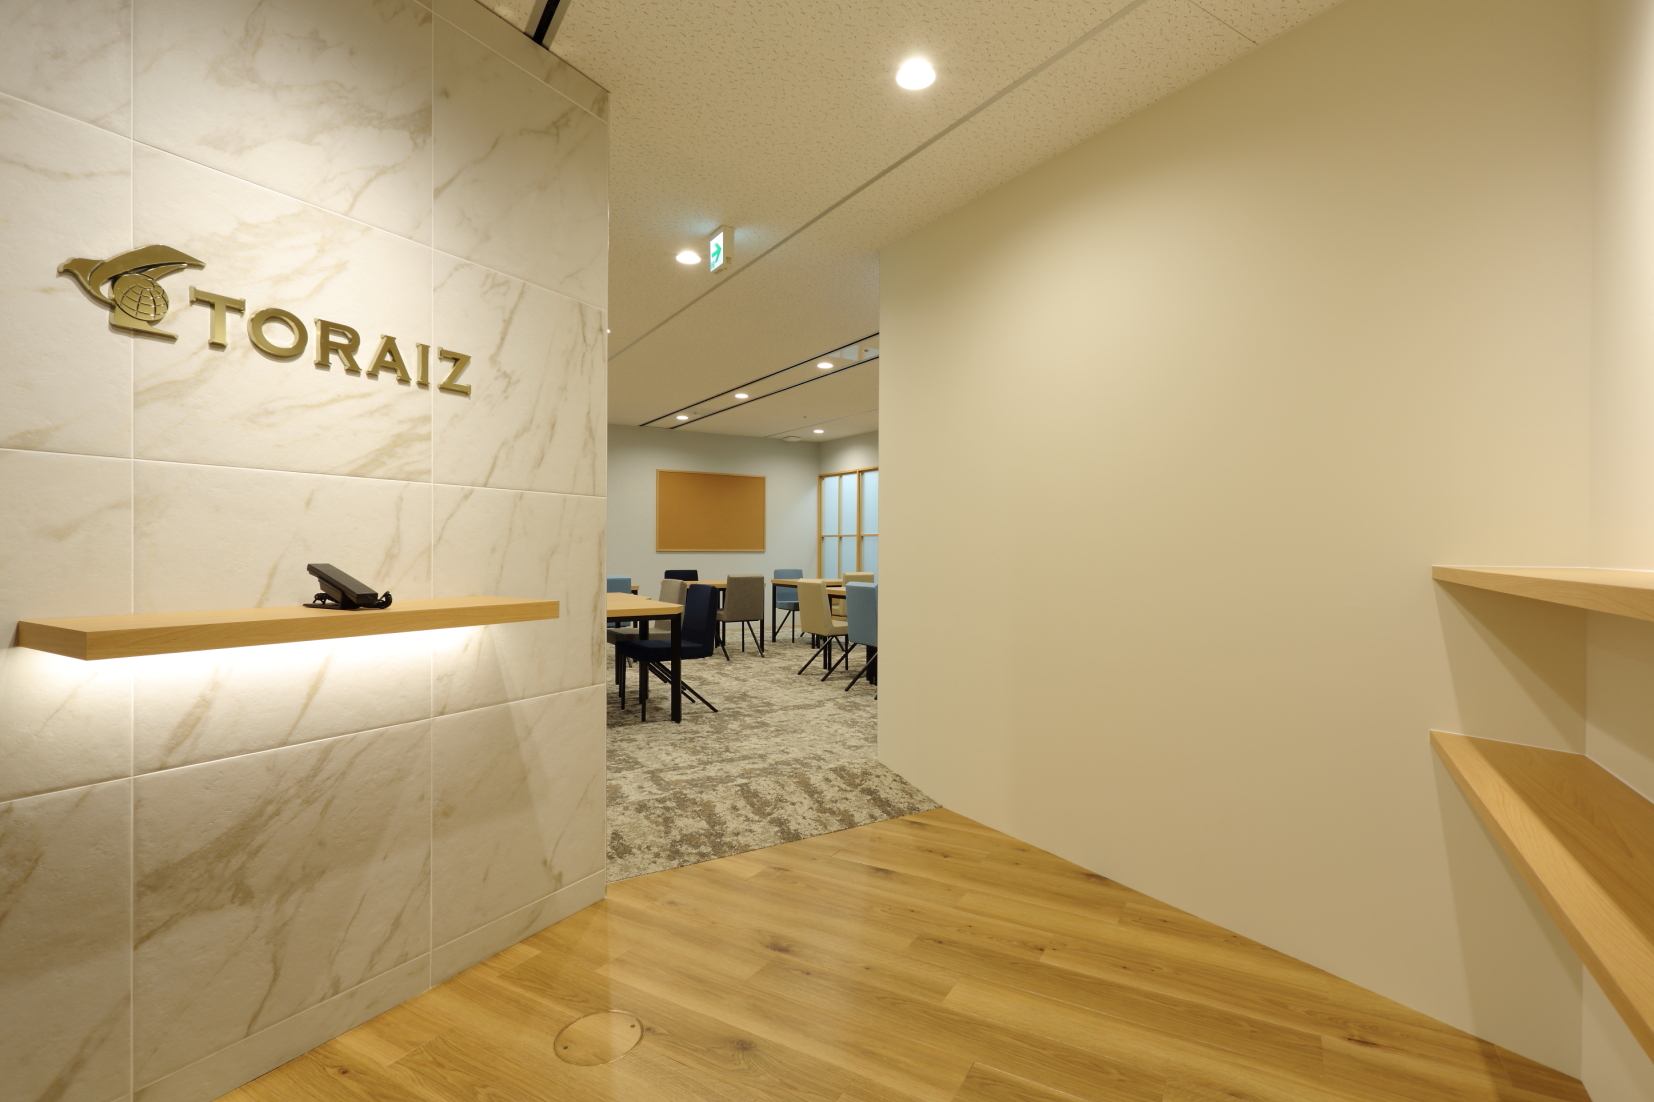 Toraiz オフィスデザイン事例 オフィス移転 オフィスデザインのトータルプロデュース 株式会社wm